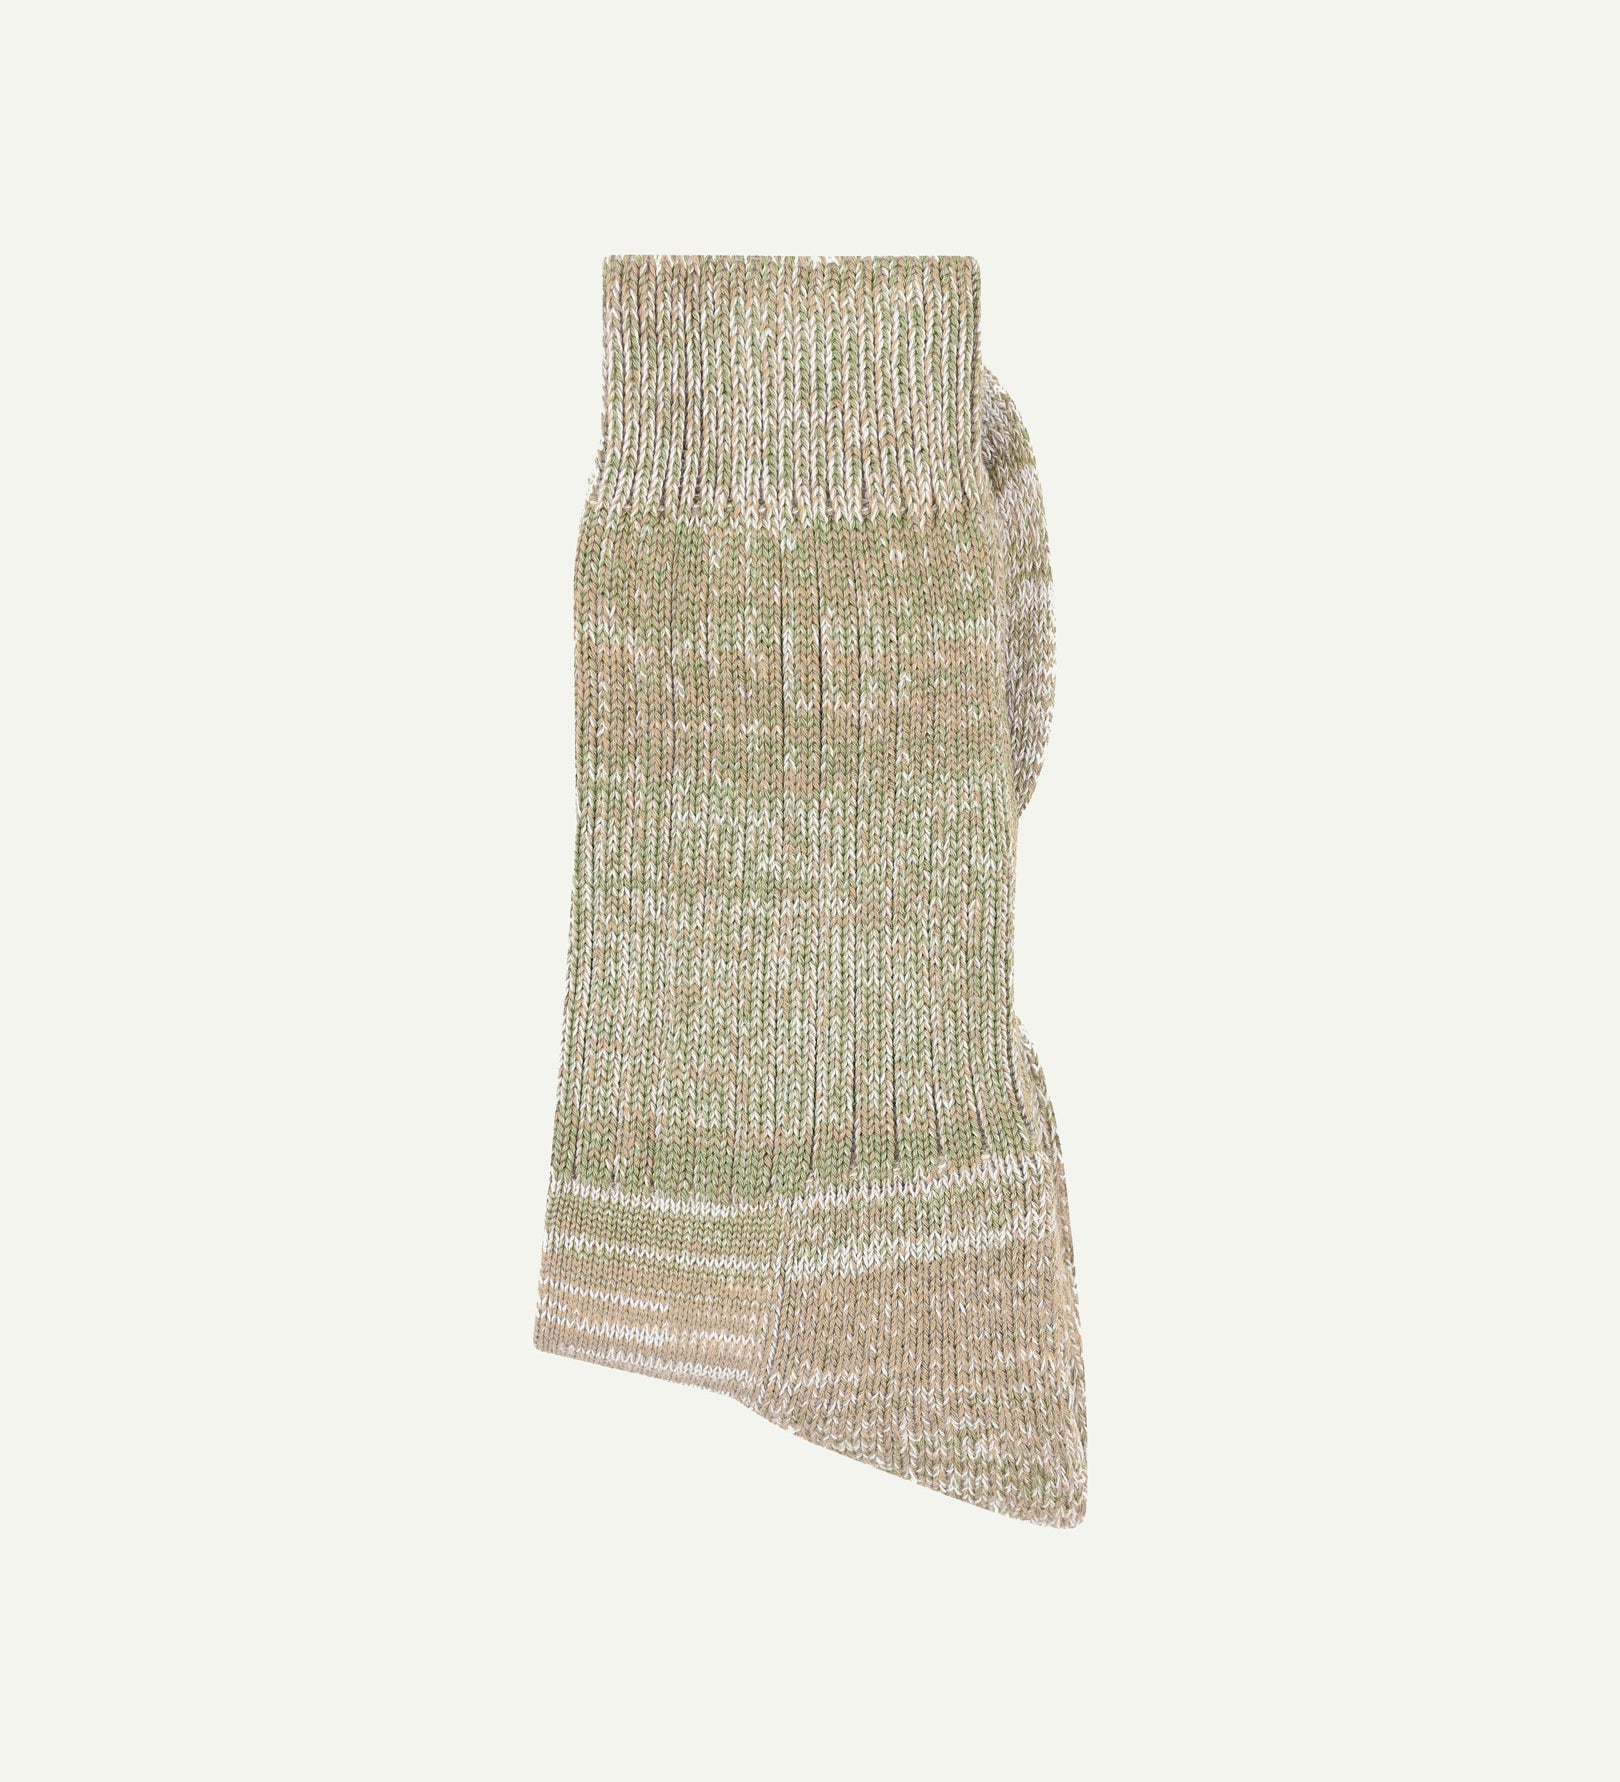 Folded Uskees 4006 khaki mix organic cotton sock, showing random parallel knitting pattern.